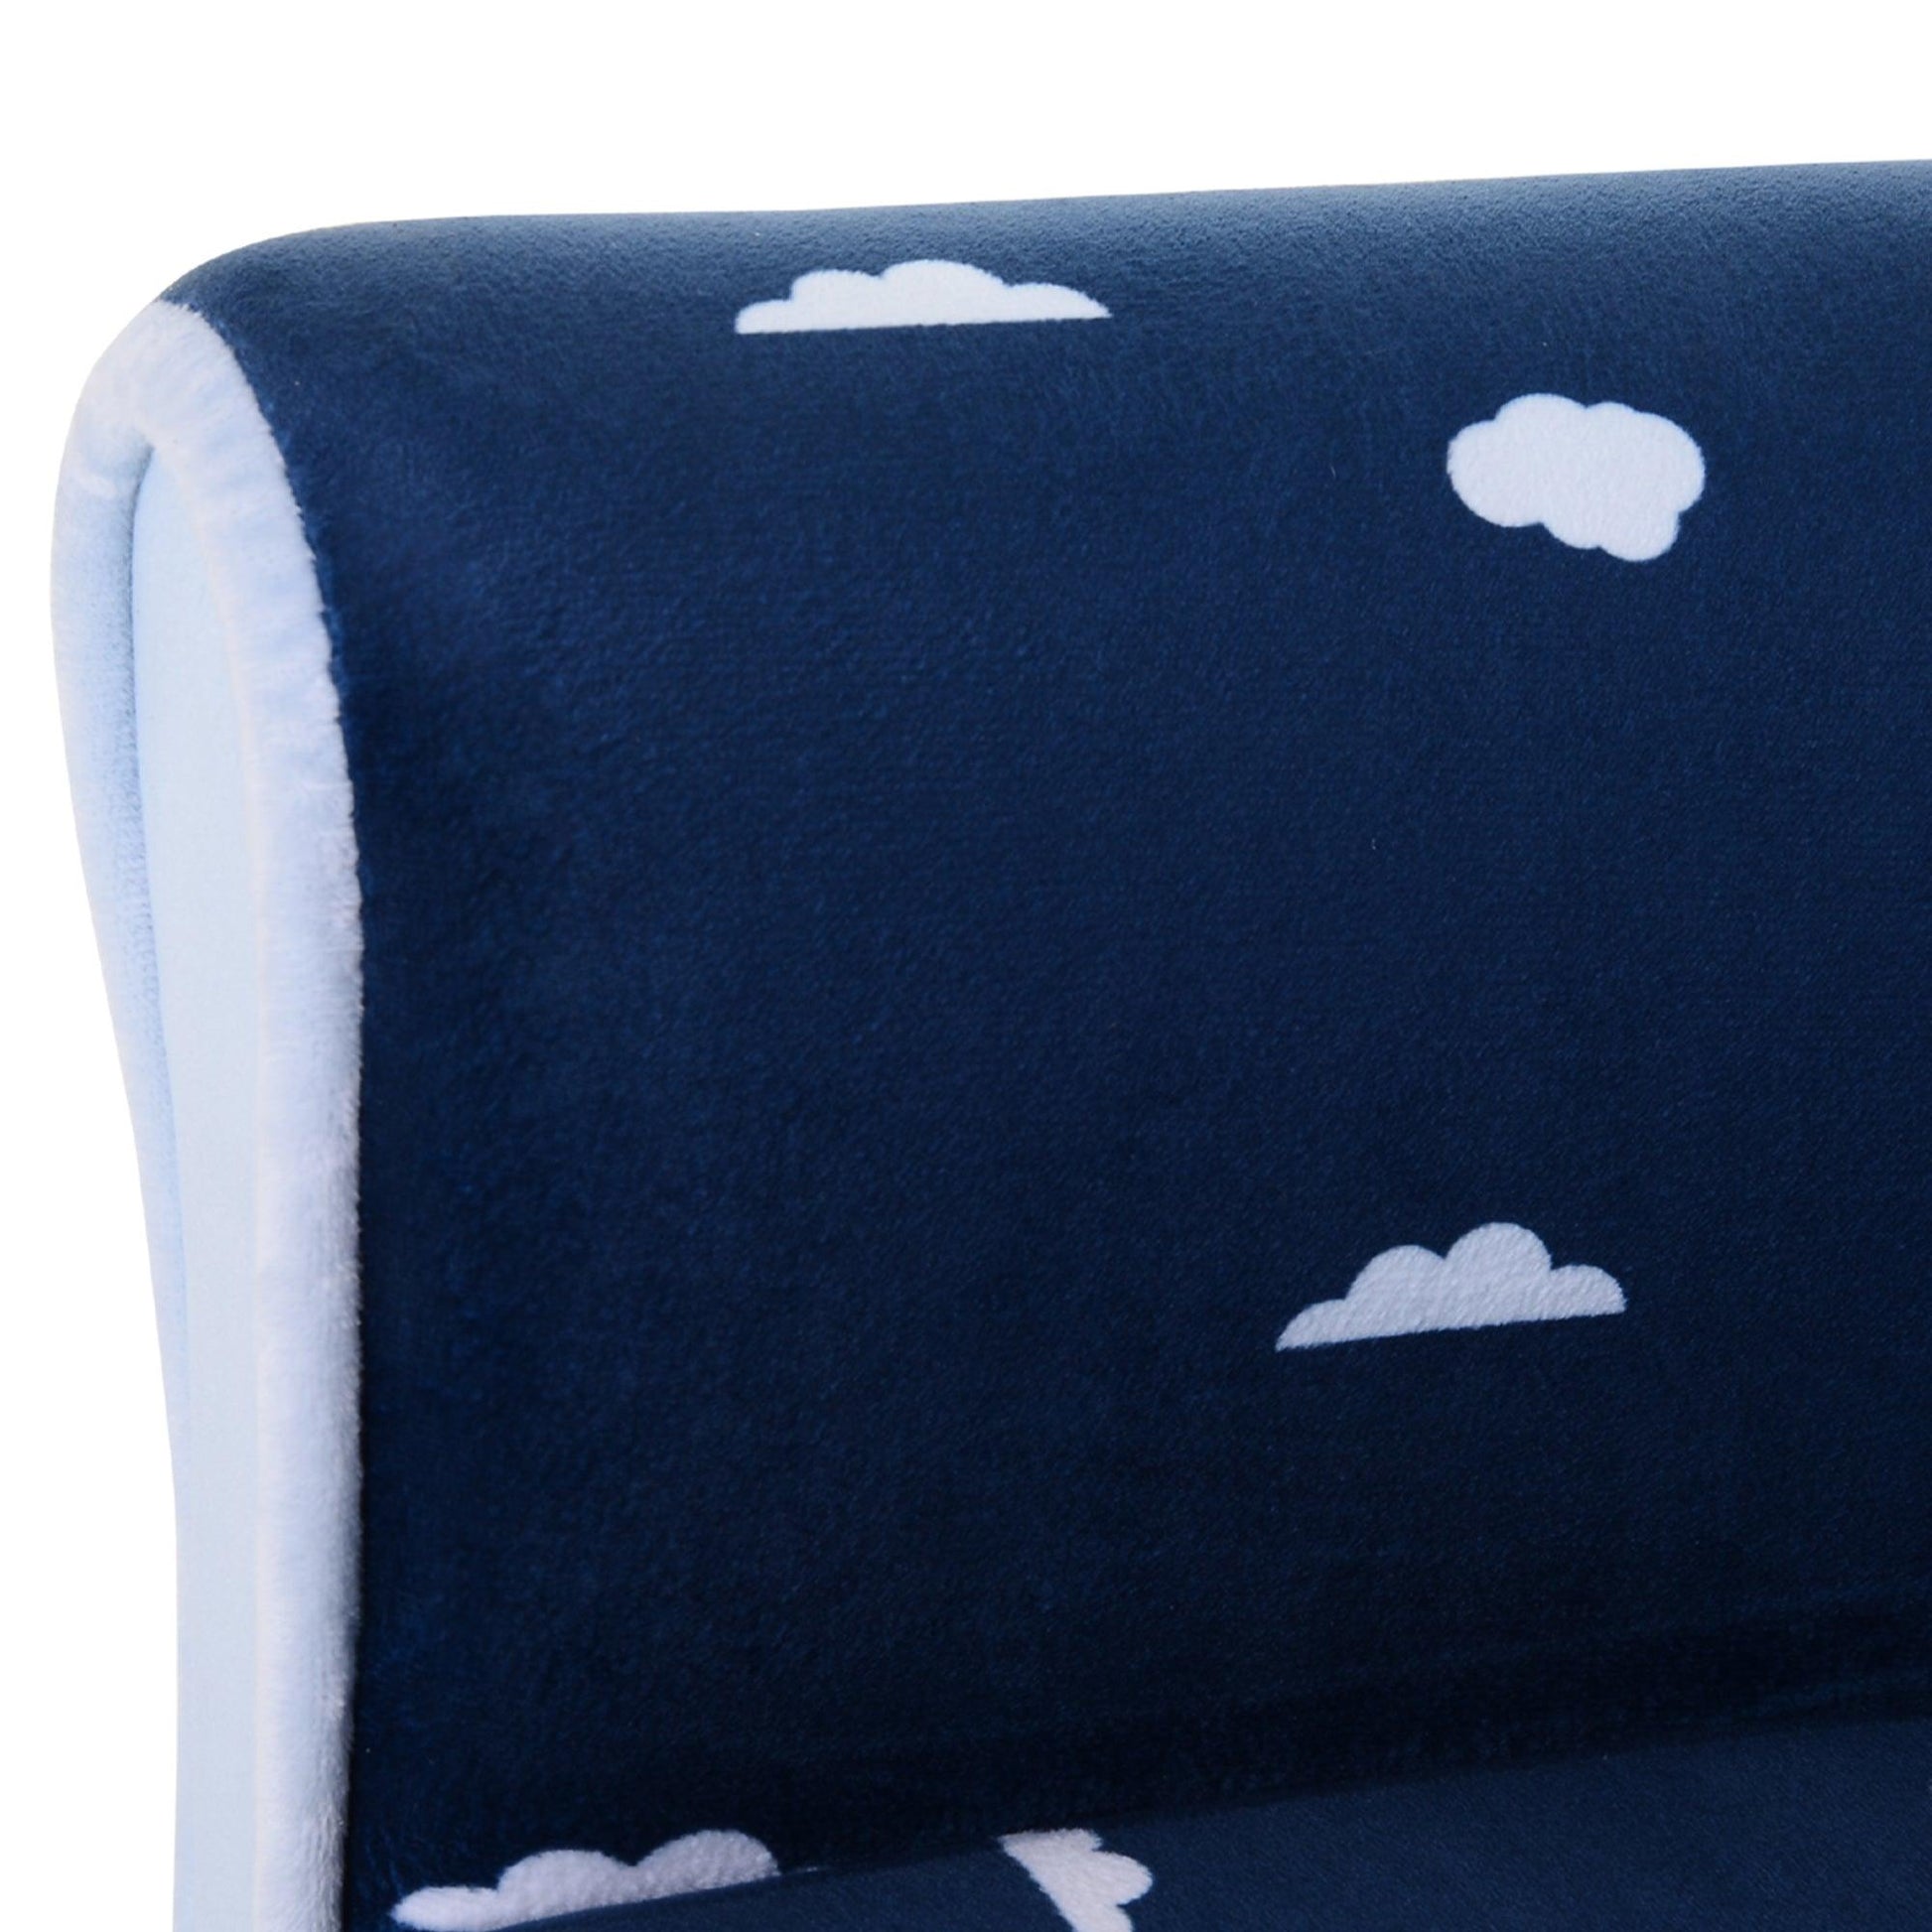 HOMCOM Children Chair Armchair Single Sofa Seat 18M+ 45kg - ALL4U RETAILER LTD